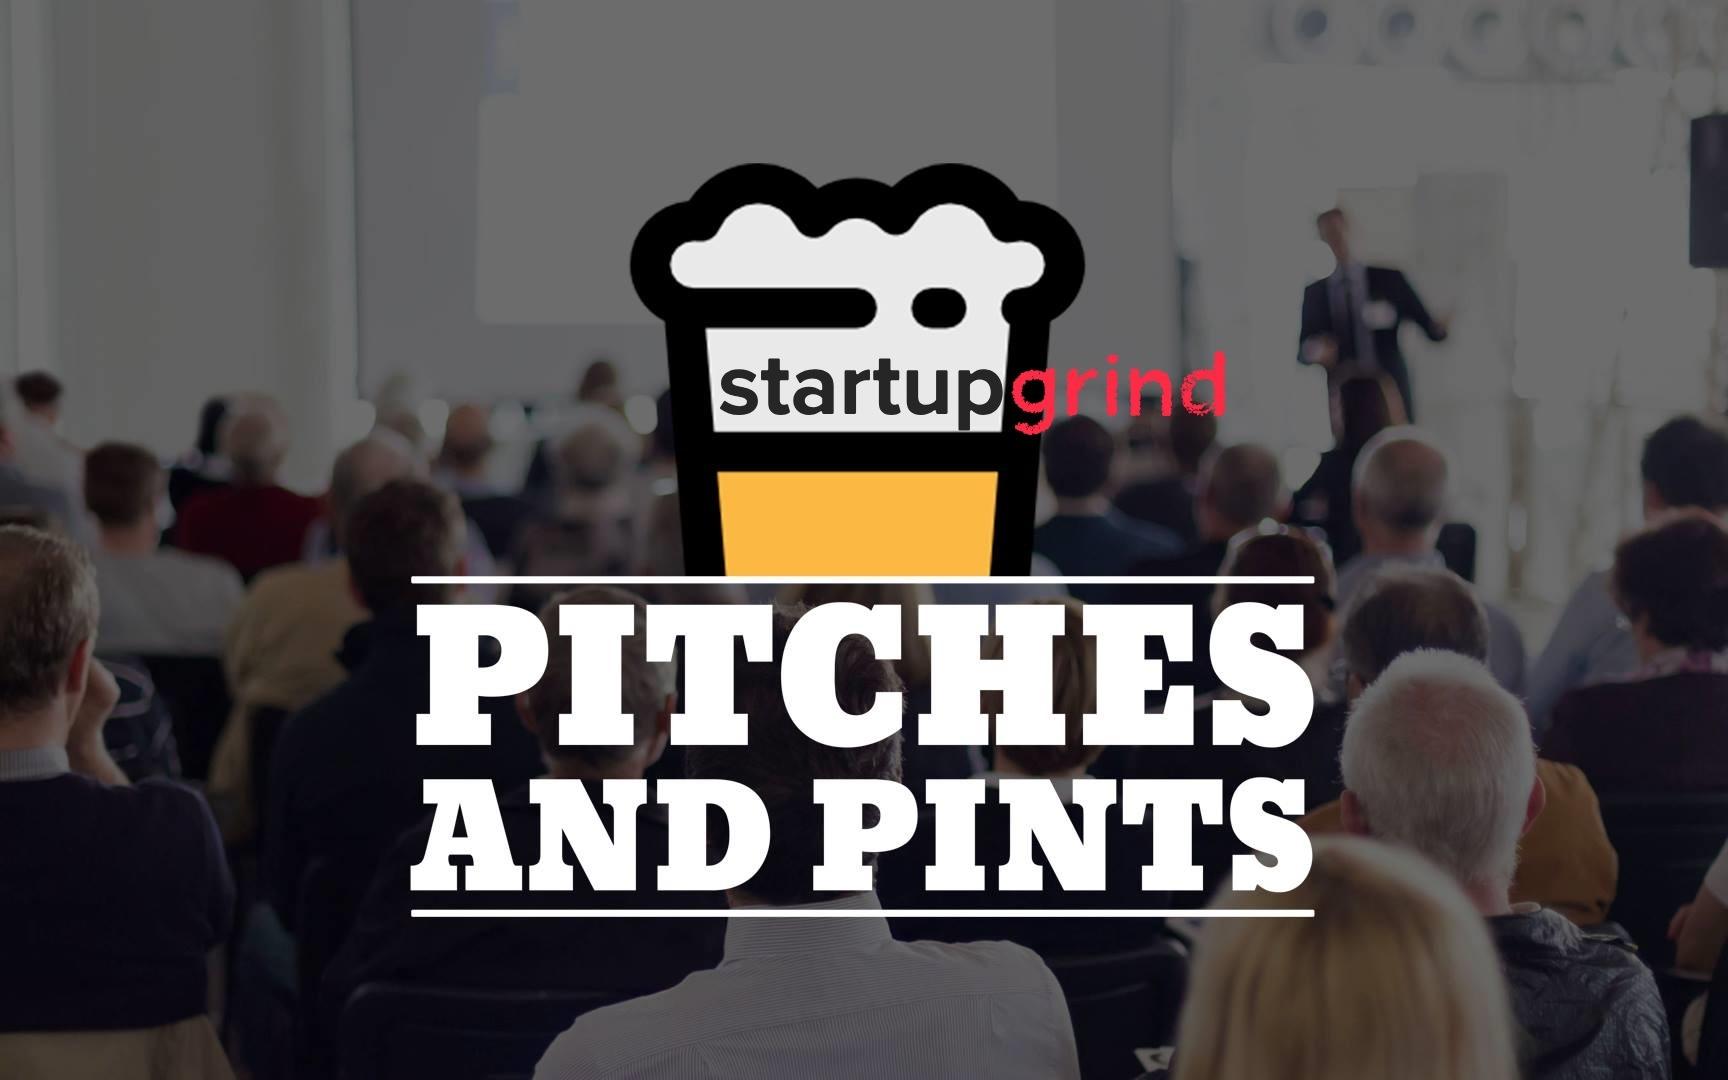 Startups,Founder,Social Entrepreneurship,Professional Networking,Pitching